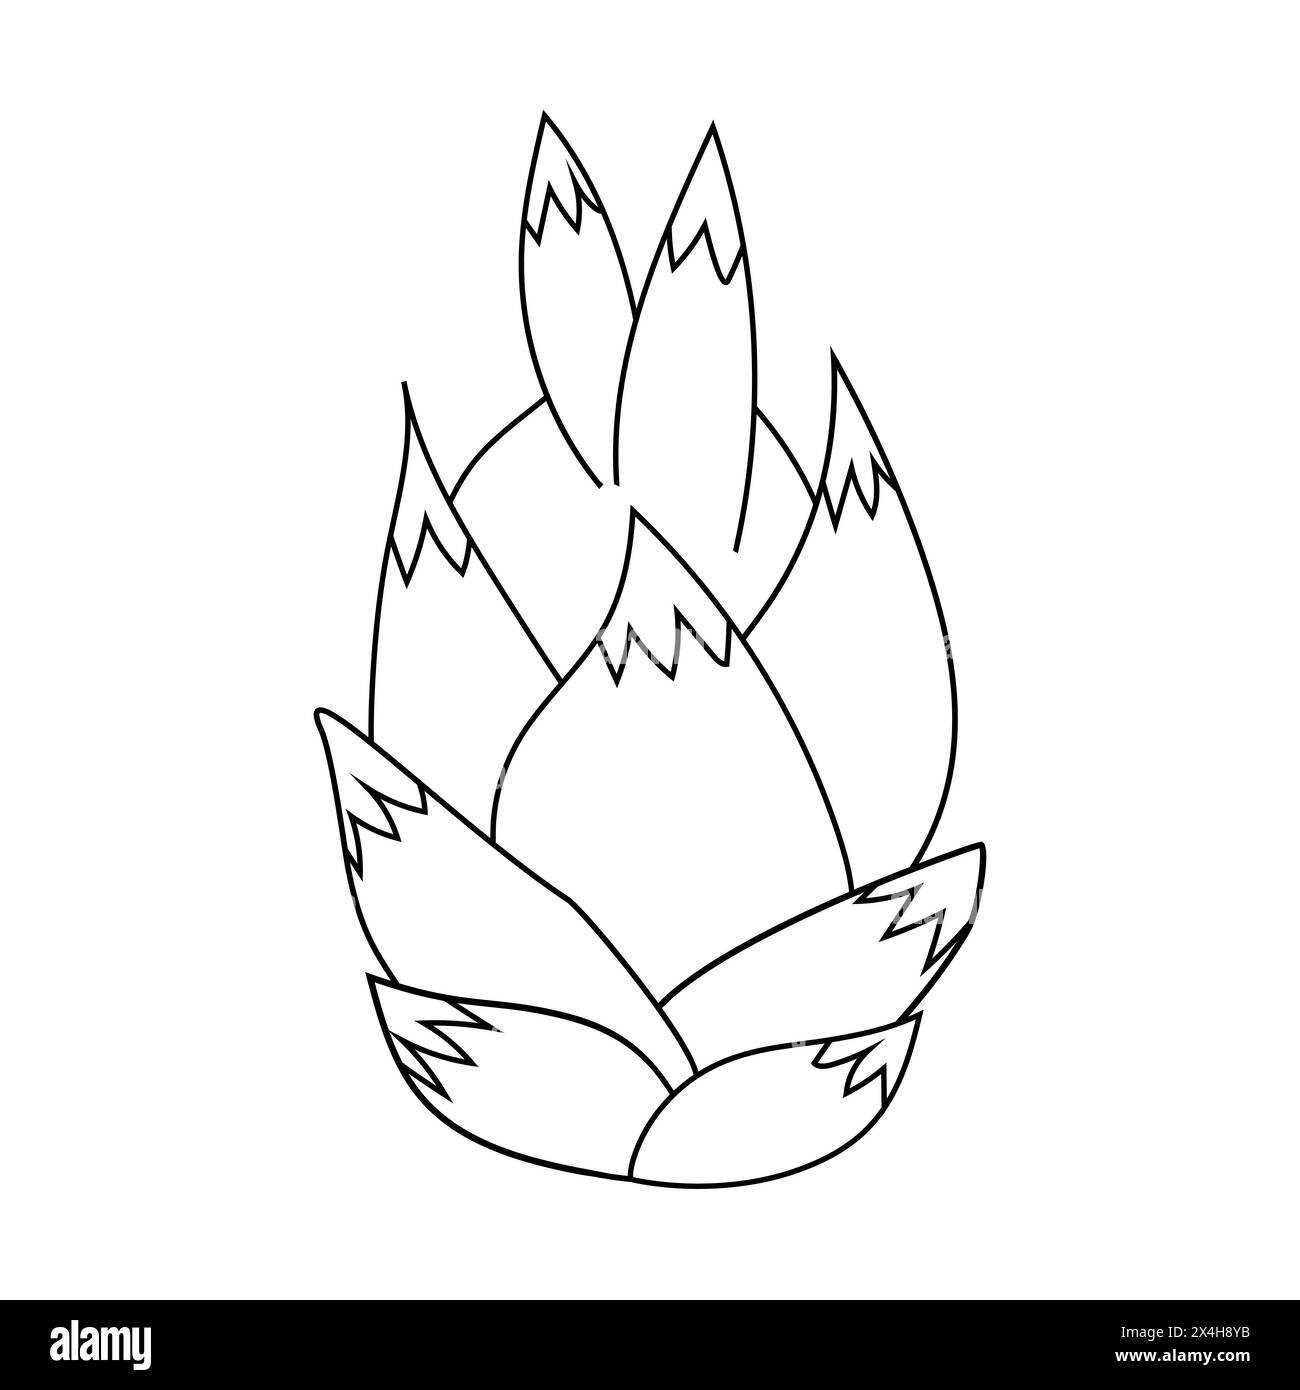 Ganze Drachenfrucht oder pitaya, Doodle-Stil flache Vektor-Umrissillustration für Kinder Malbuch Stock Vektor